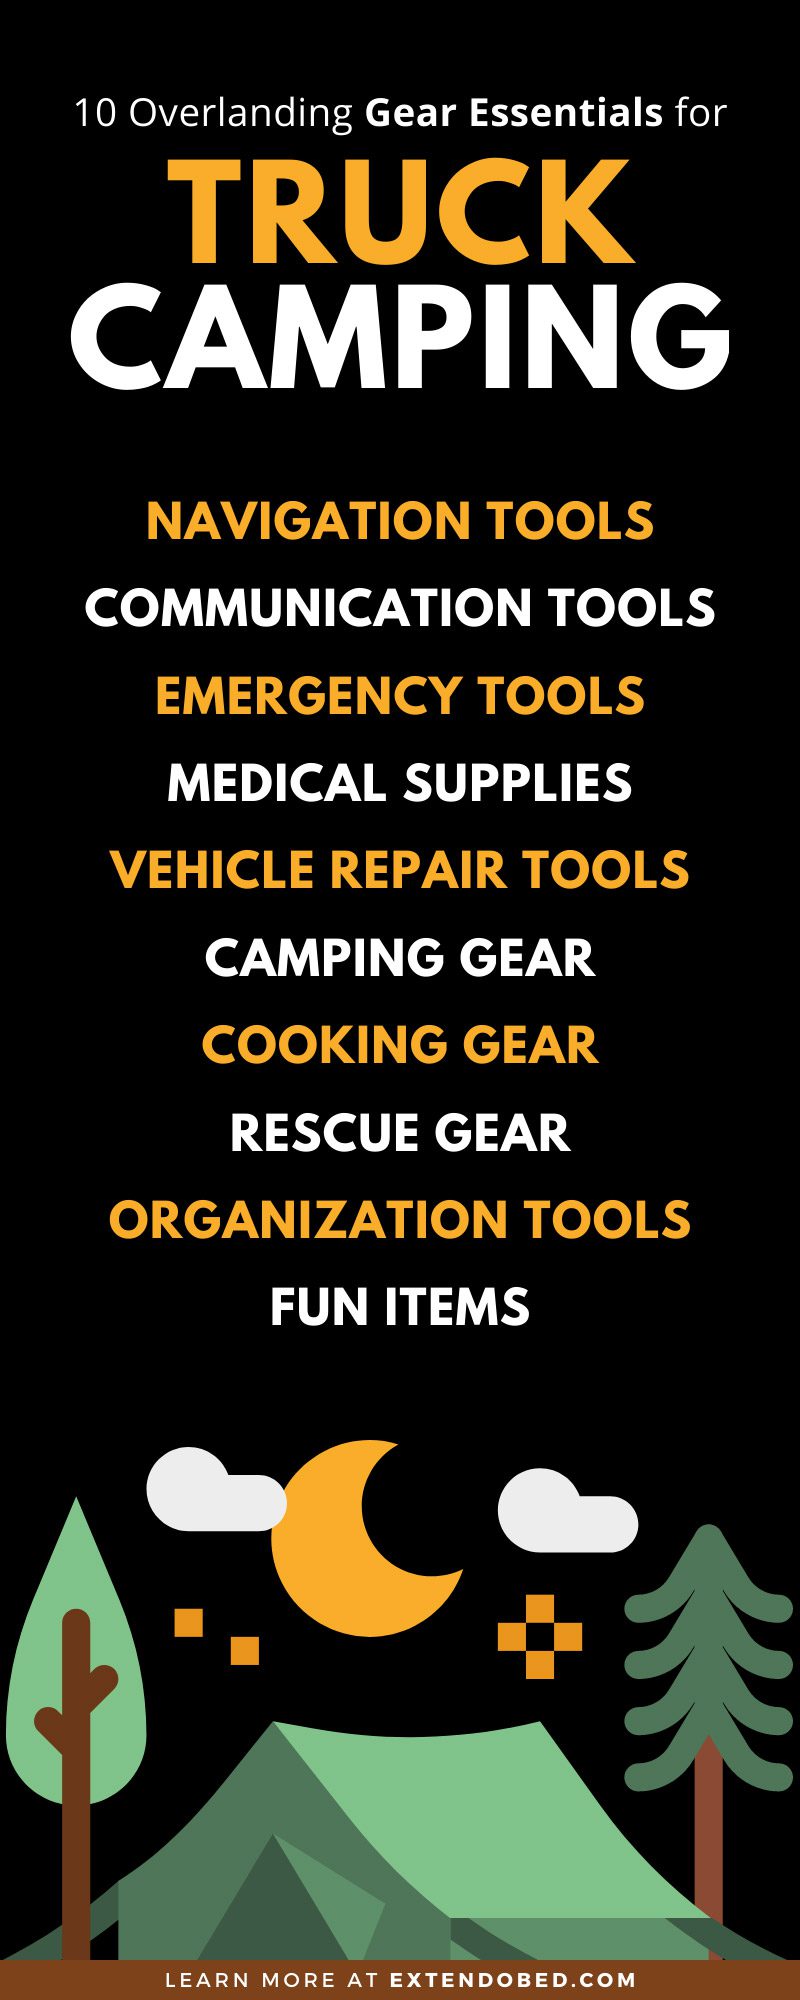 10 Overlanding Gear Essentials for Truck Camping